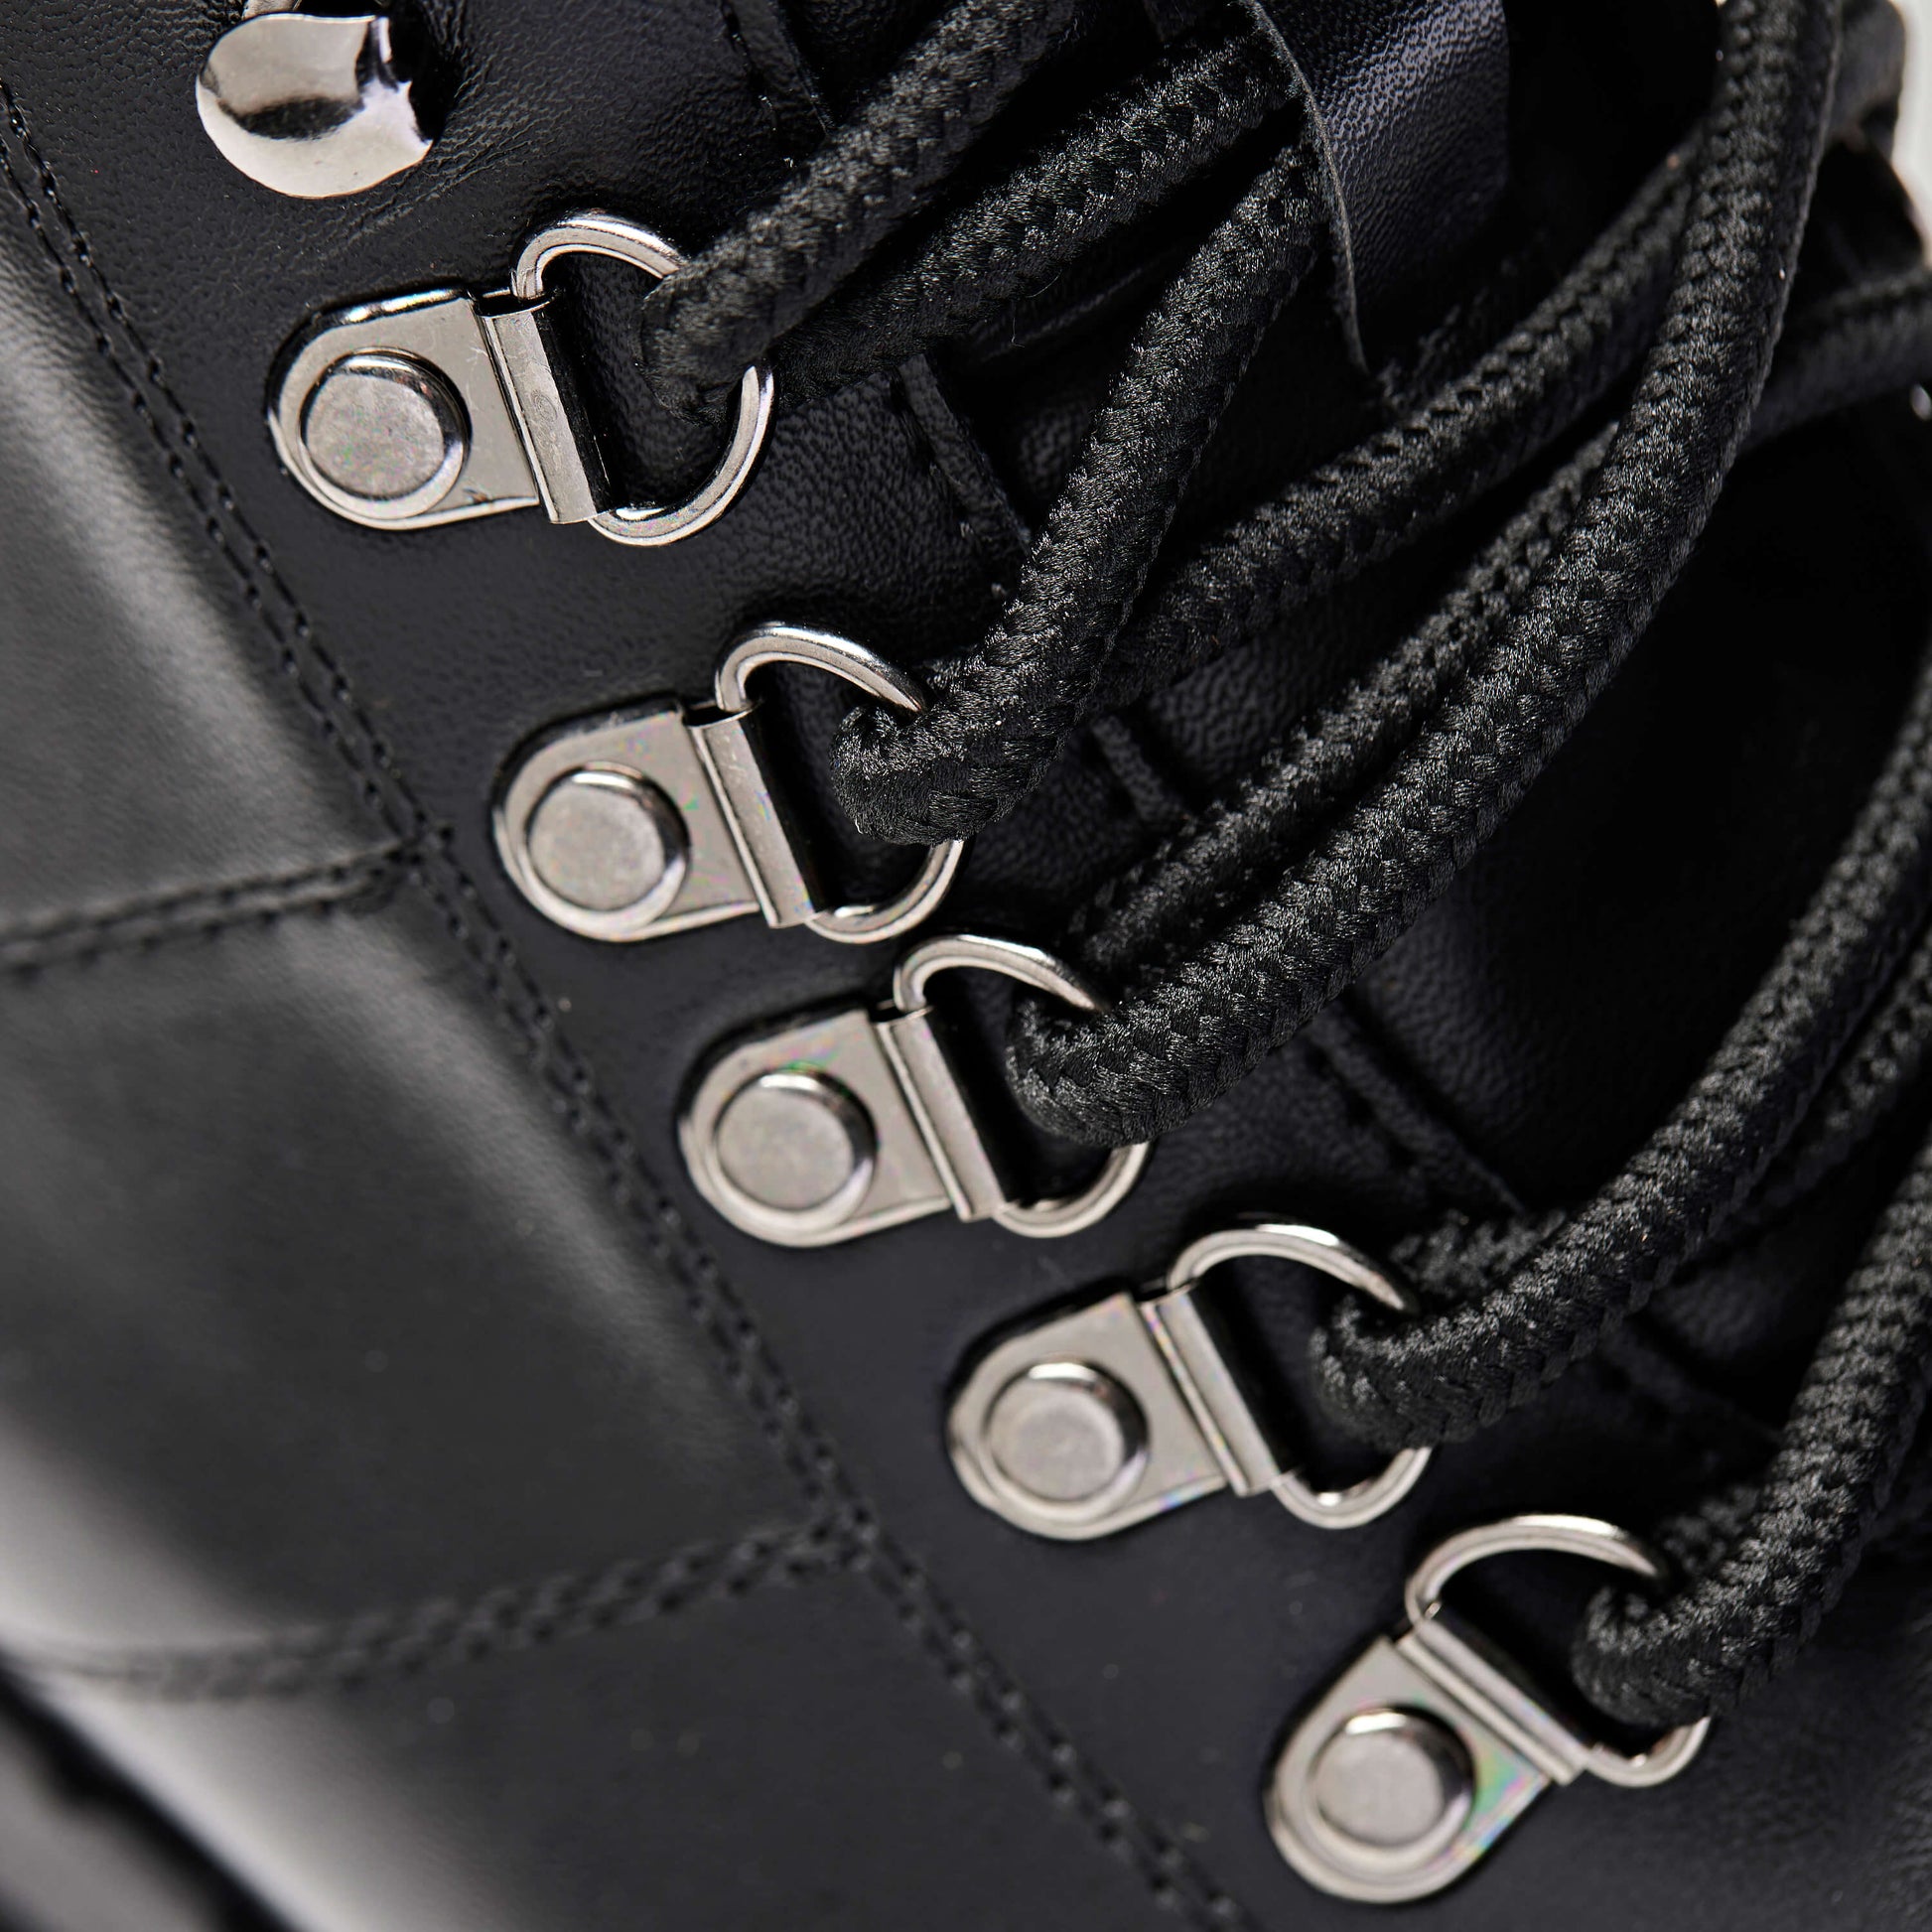 Krait Switch Hiking Boots - Ankle Boots - KOI Footwear - Black - Lace Detail